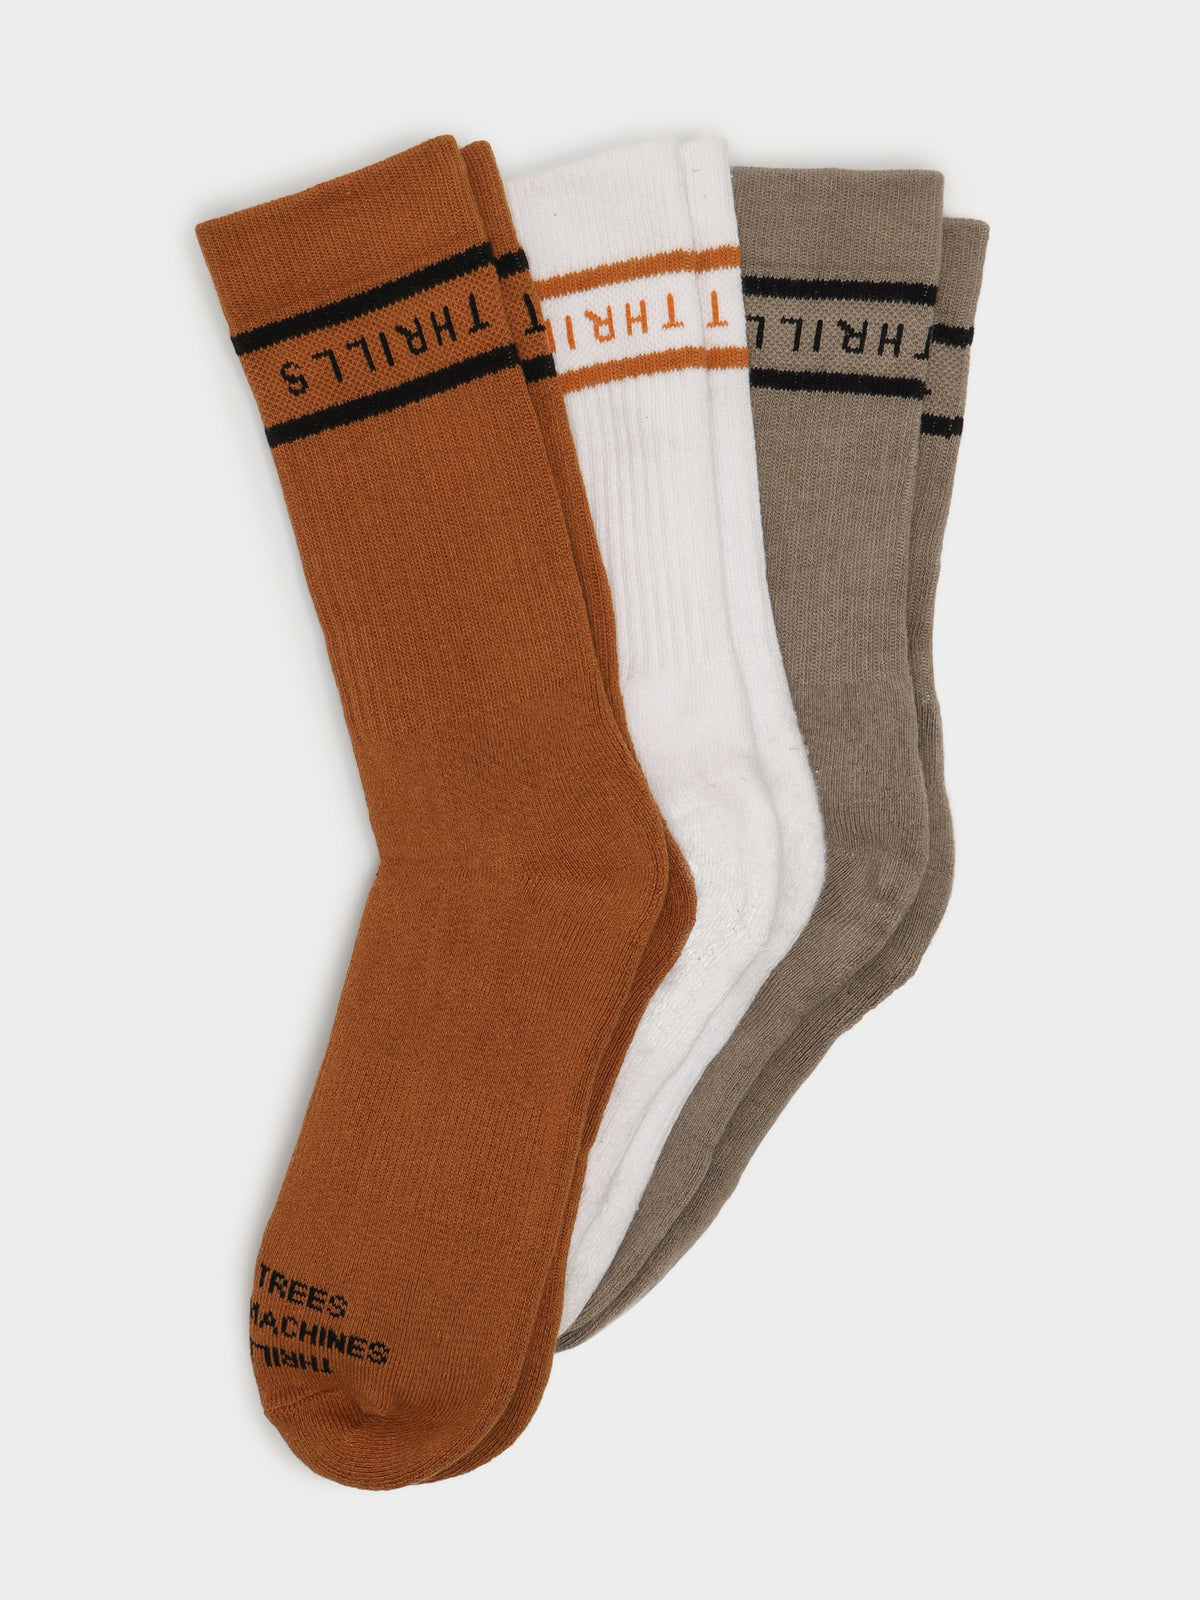 3 Pairs of Minimal Thrills Socks in Spice, Gravel &amp; White